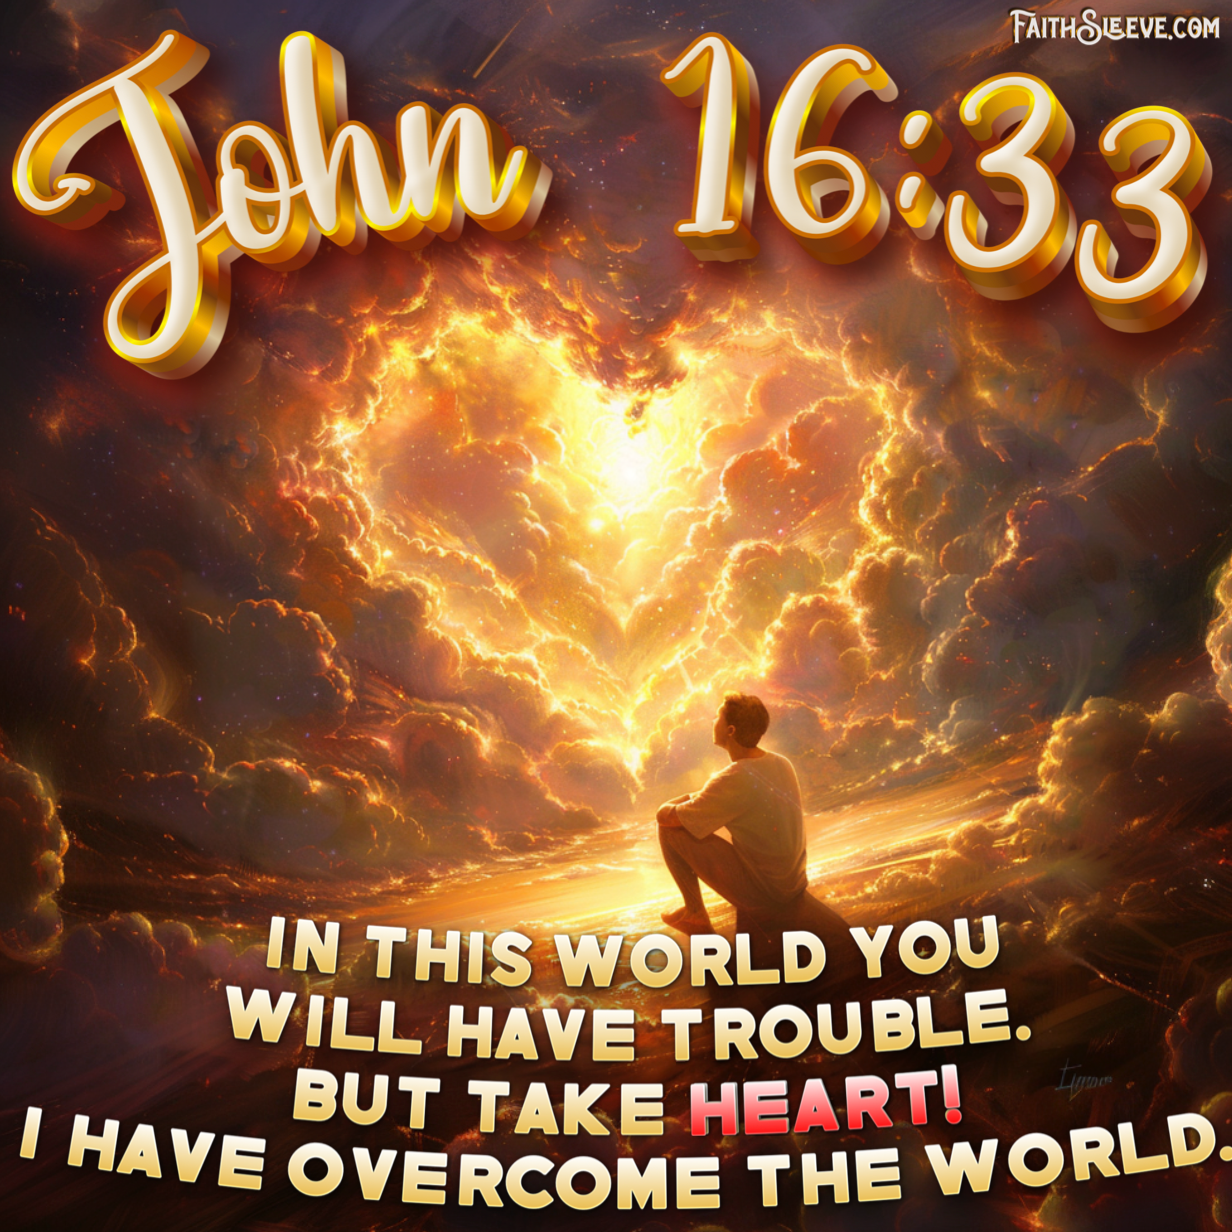 John 16:33 Bible Verse - I Have Overcome the World